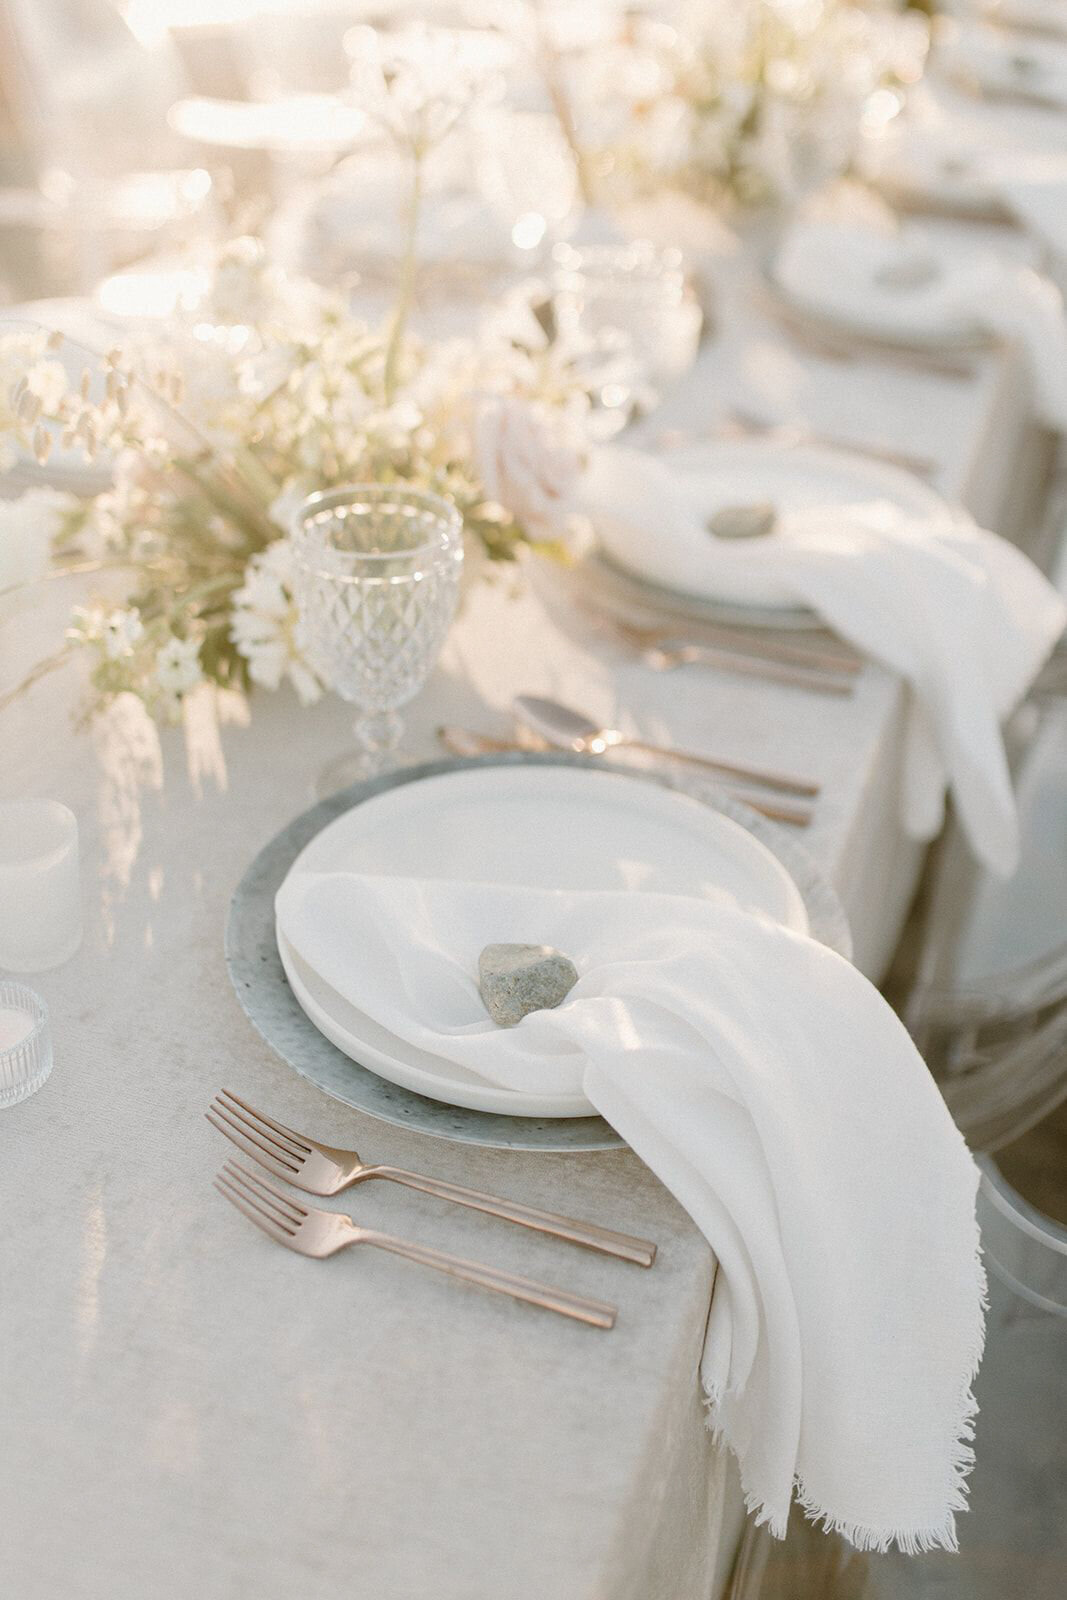 Gorgeous white on white wedding reception decor, captured by Nikki Collette, featured on the Brontë Bride Wedding Vendor Guide.